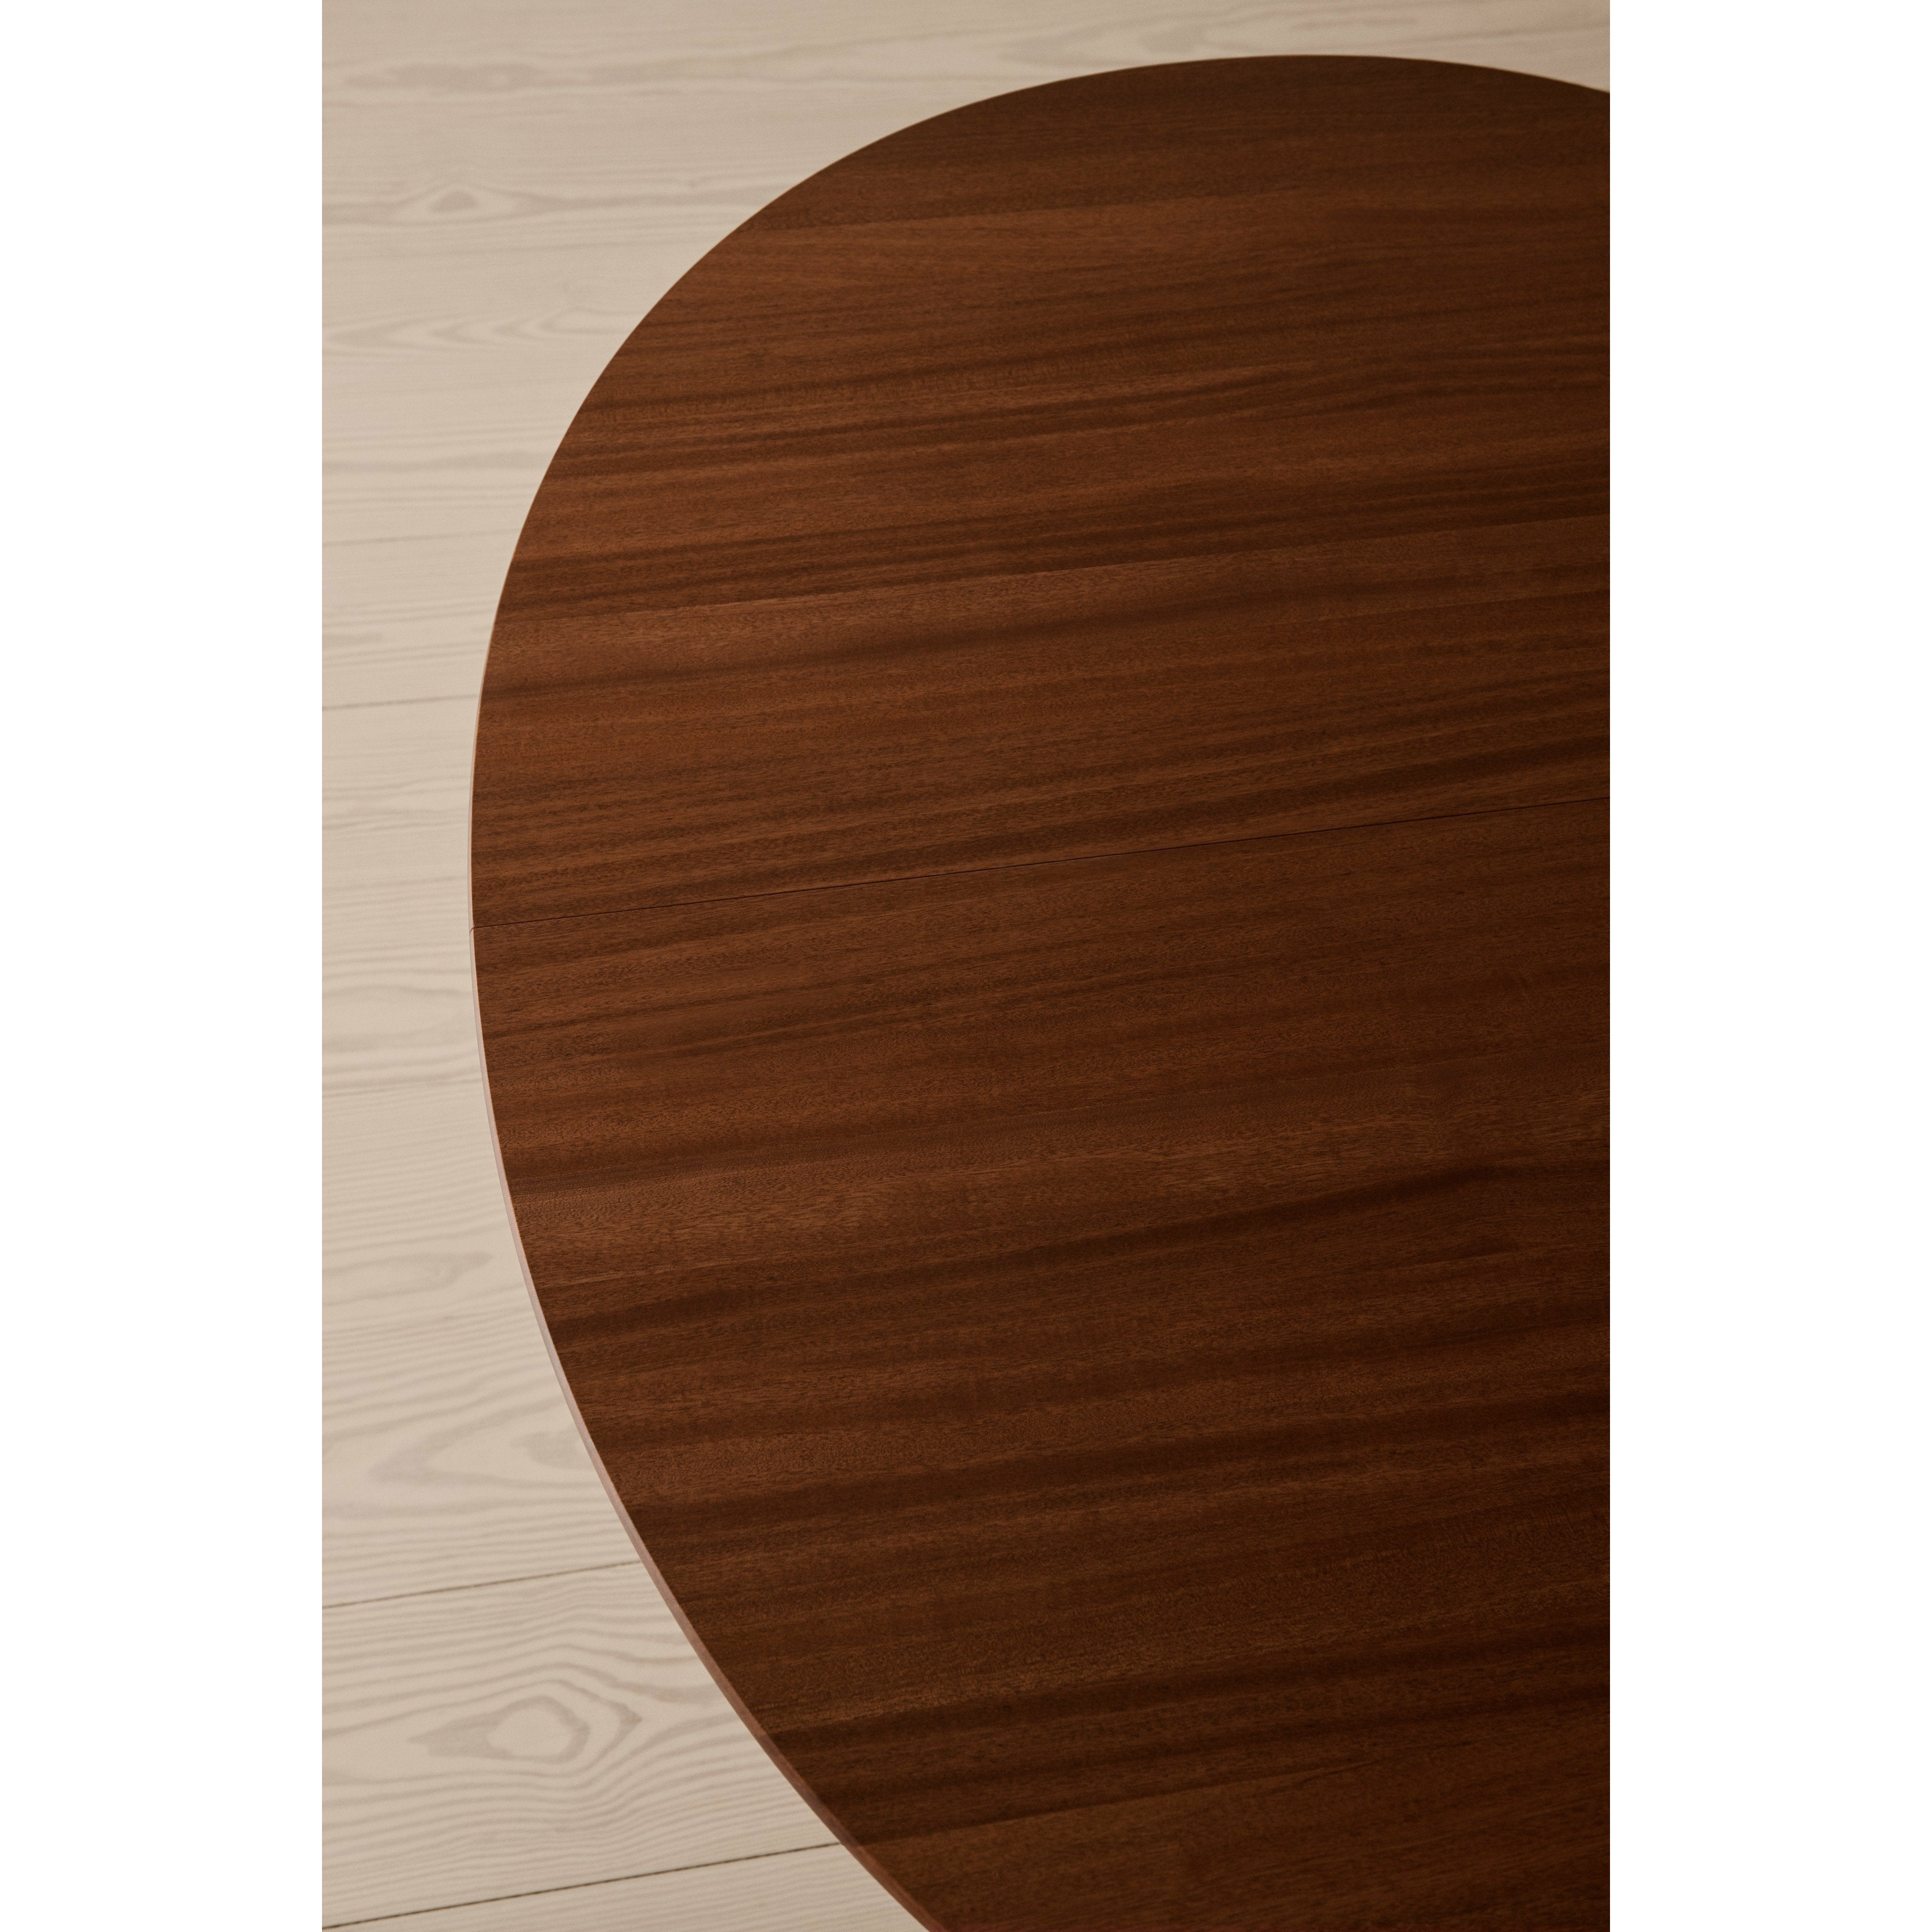 Carl Hansen CH337 matbord 140x115 cm, oljad mahogny